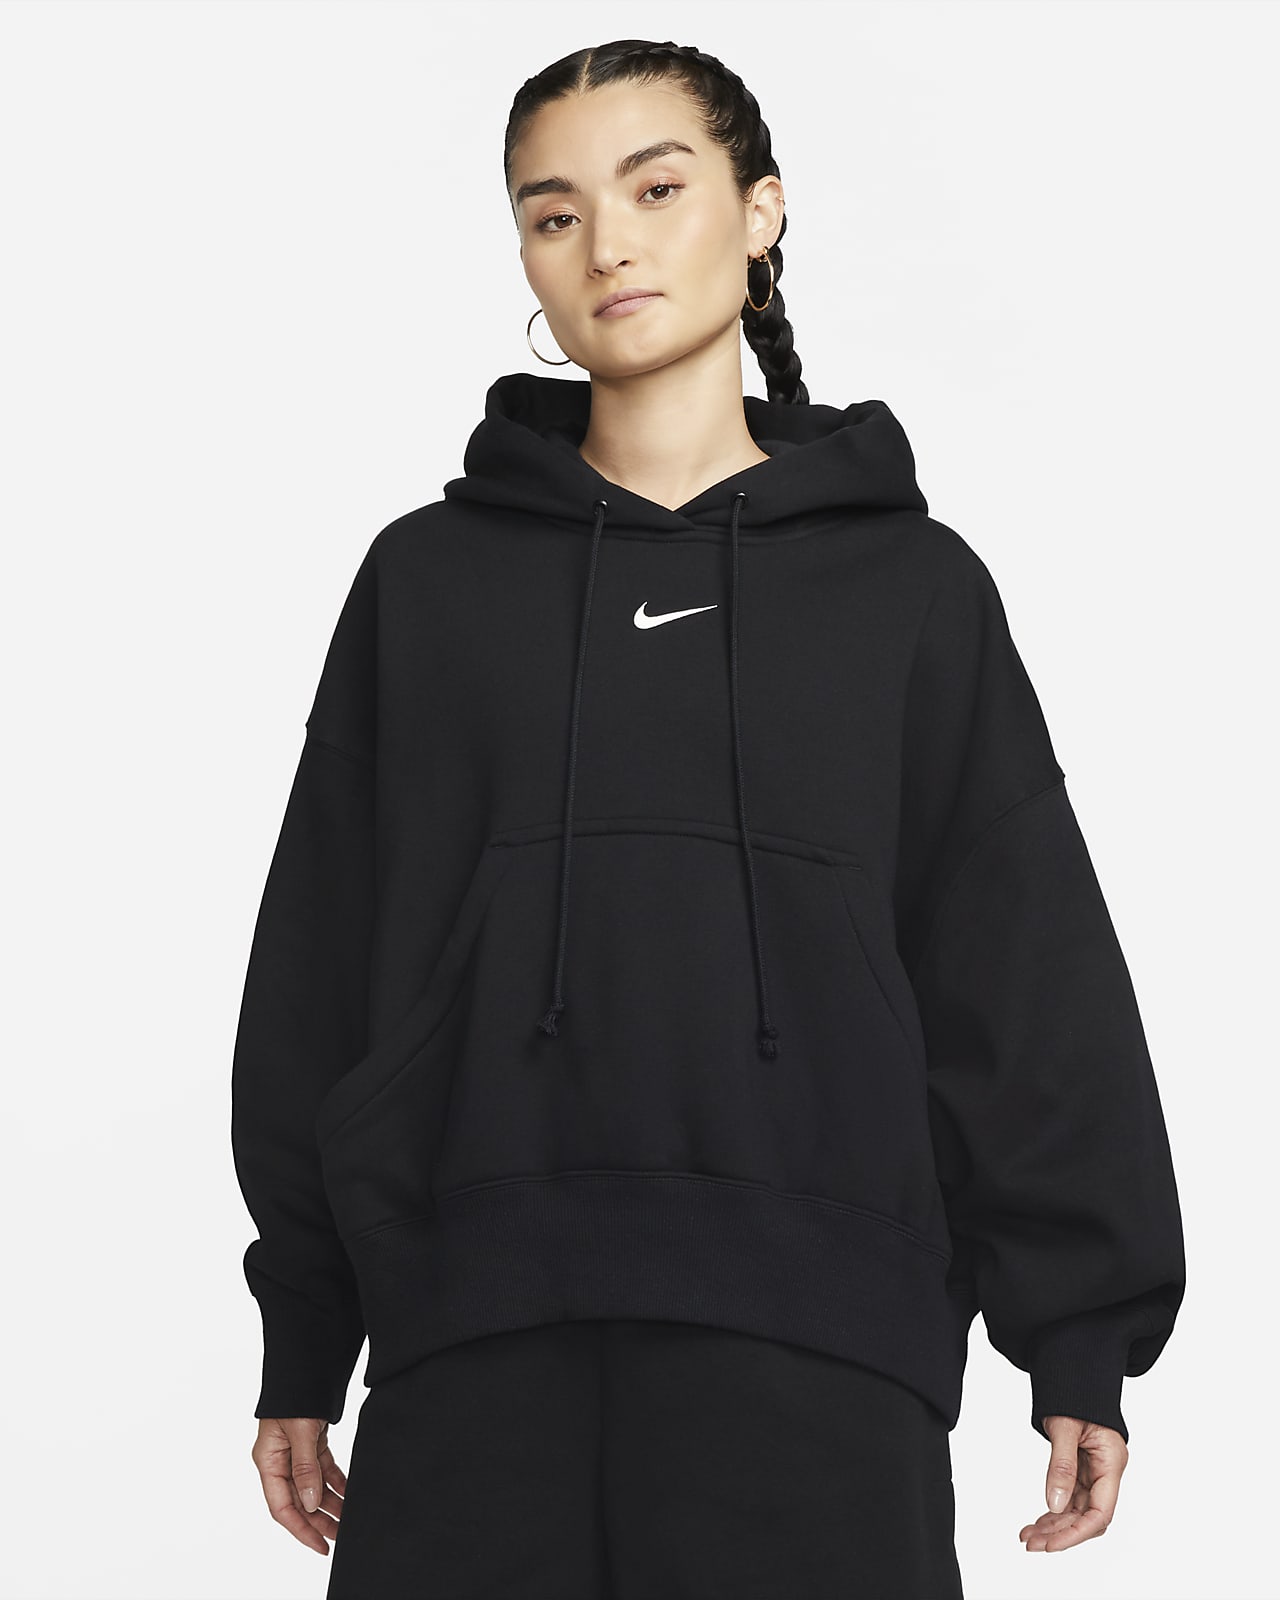 Hoodie pullover extremamente folgado Nike Sportswear Phoenix Fleece para mulher